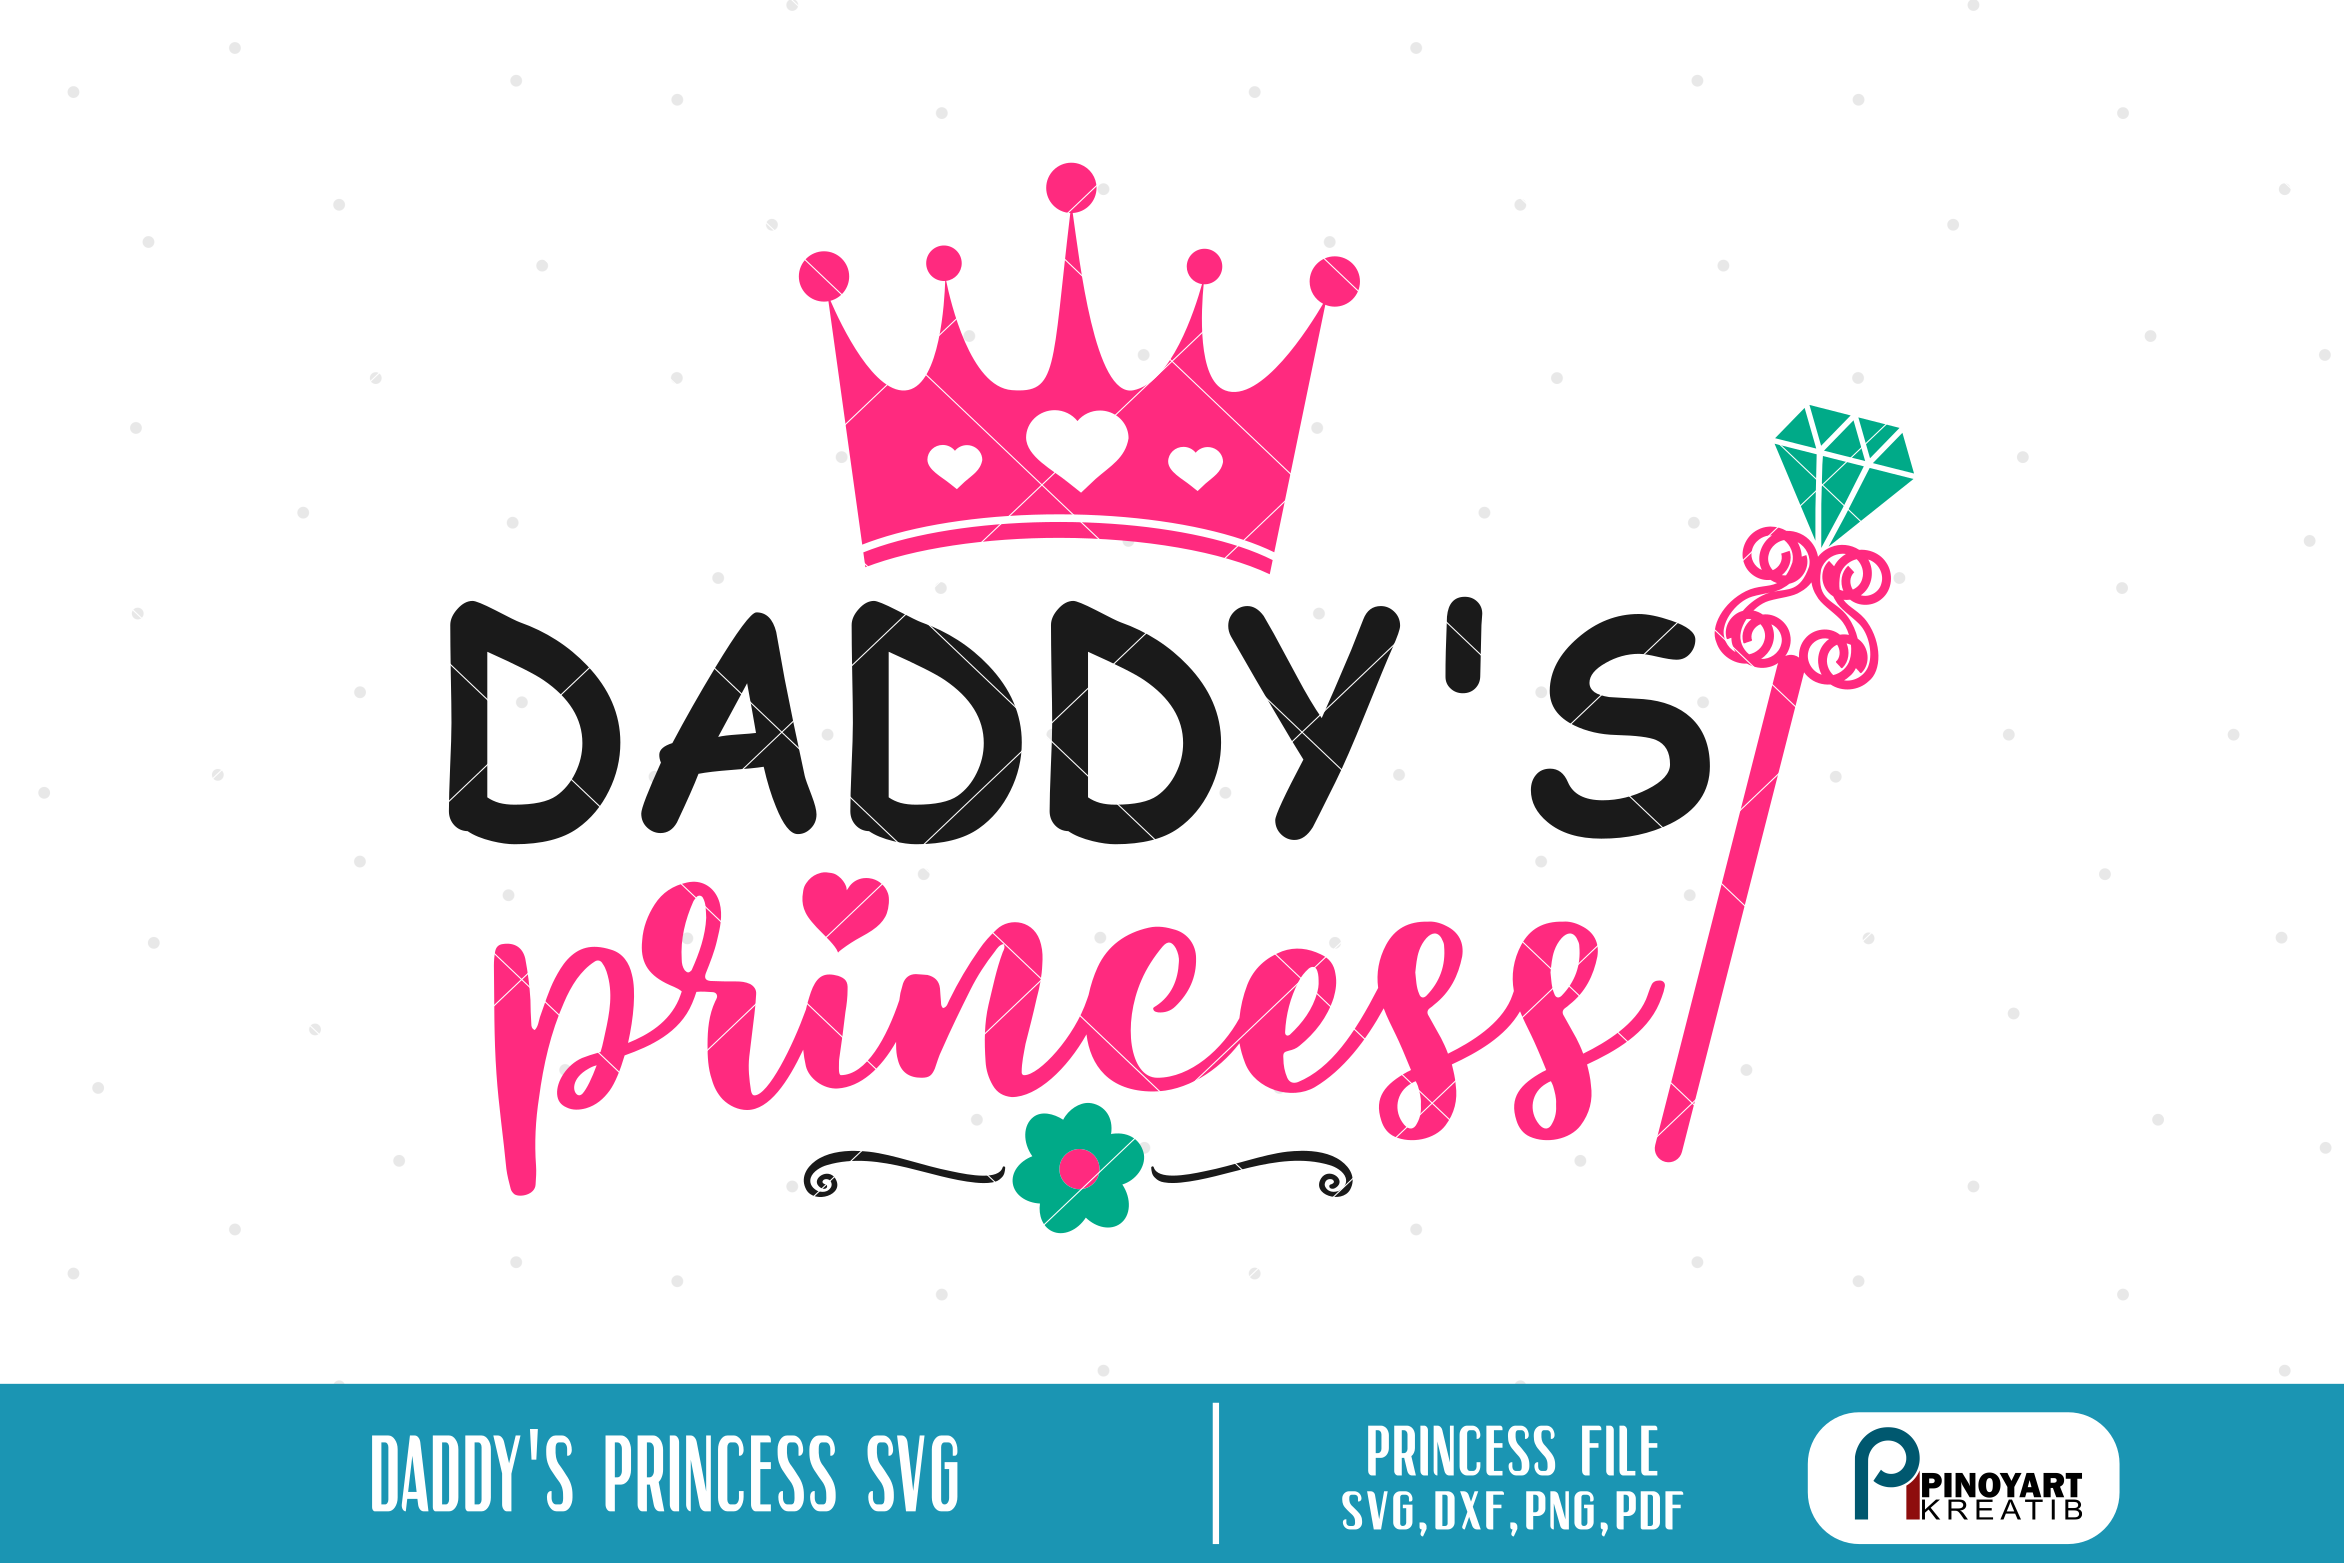 daddy's princess svg,daddy's princess dxf,daddy svg,princess (67363